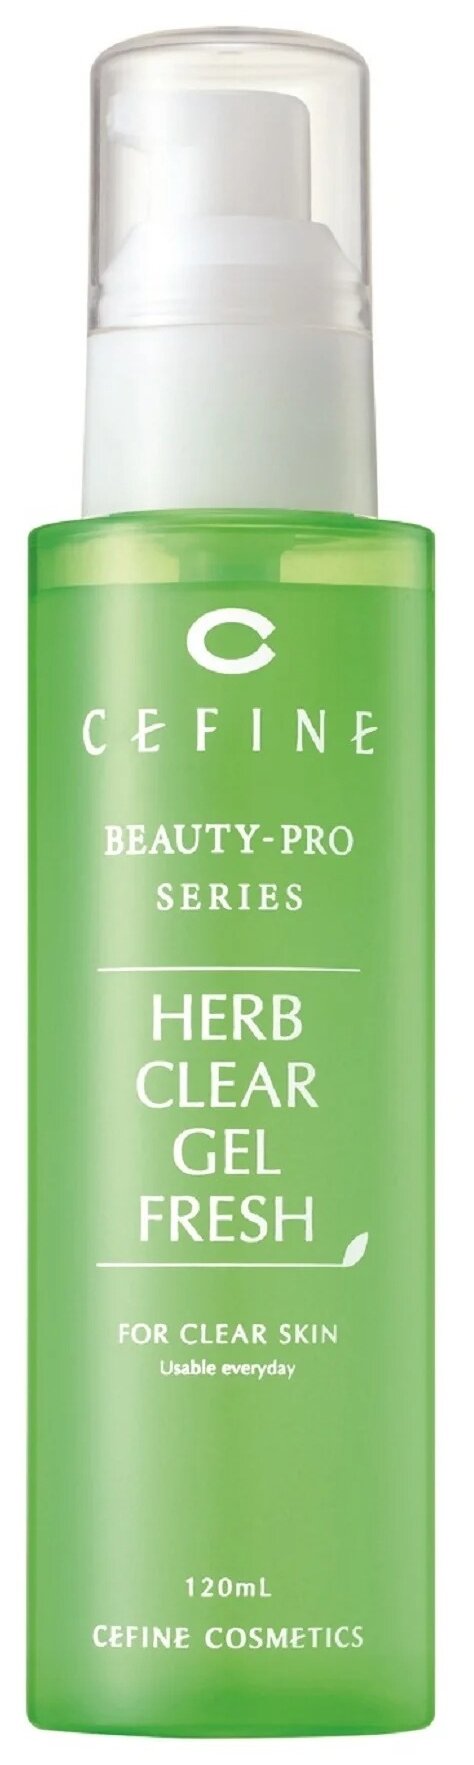 Cefine пилинг-гель Beauty-Pro Series Herb Clear Gel Fresh